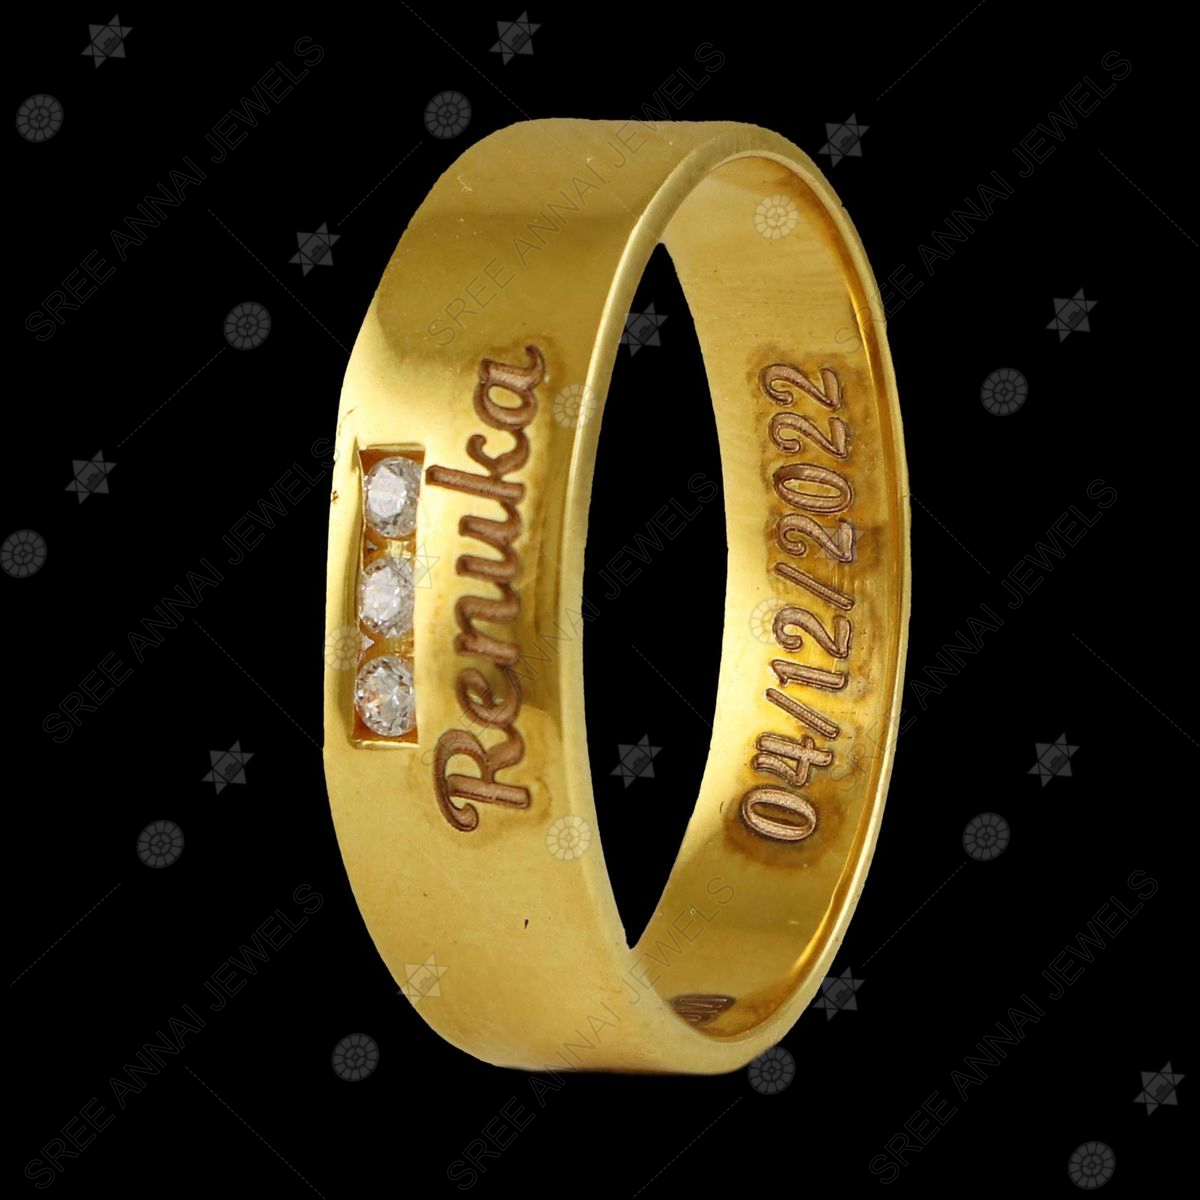 Prema Jewellery - BIS 916 Hallmarked Wedding Ring Starting from 3gm onwards  #weddingrings #engagementrings #keralawedding #southindianjewellery  #keralabride | Facebook